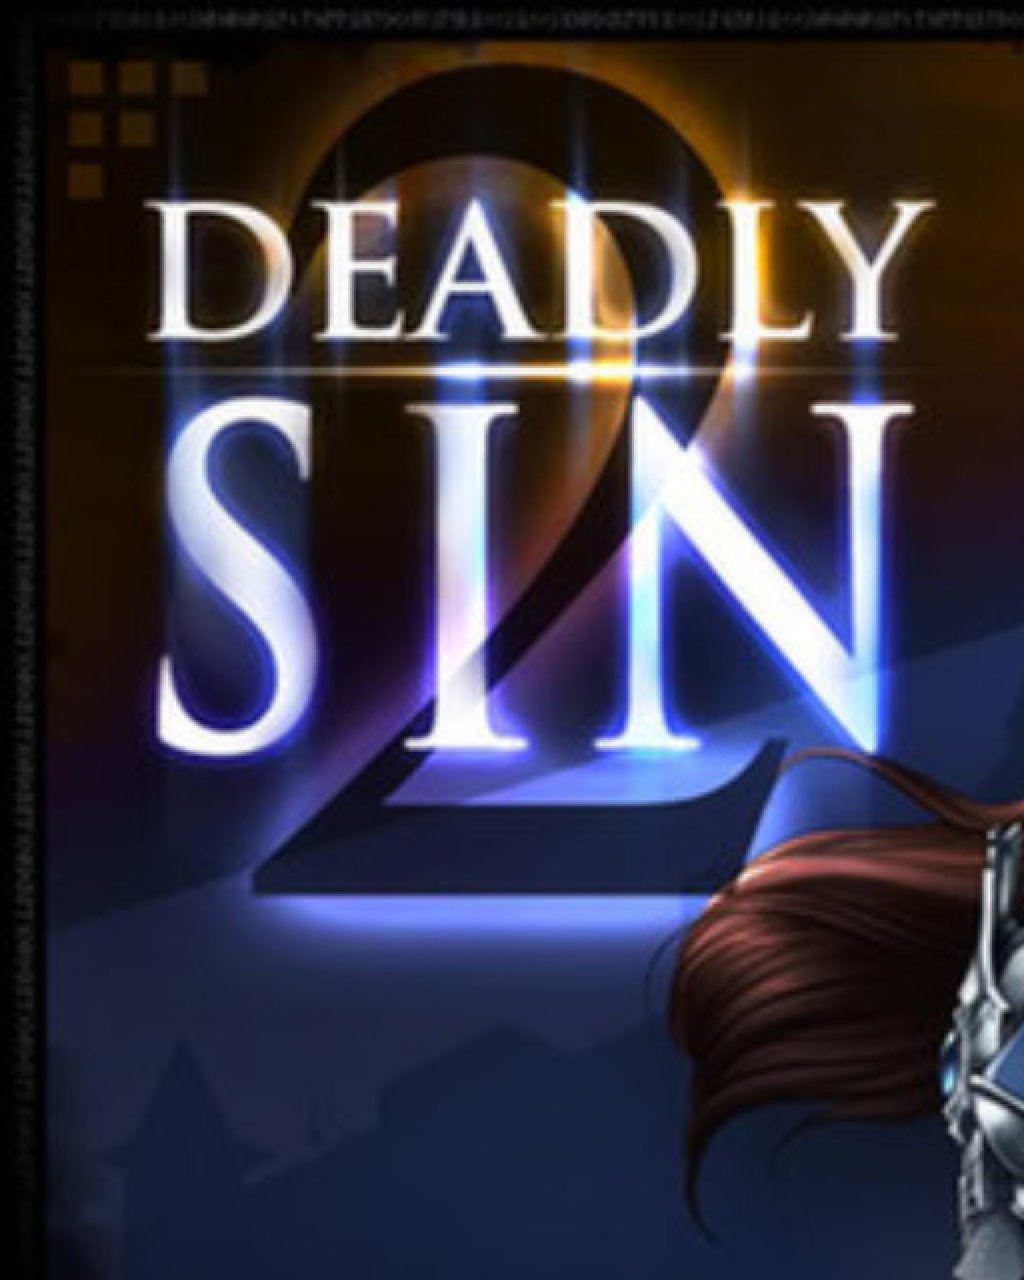 Deadly Sin 2